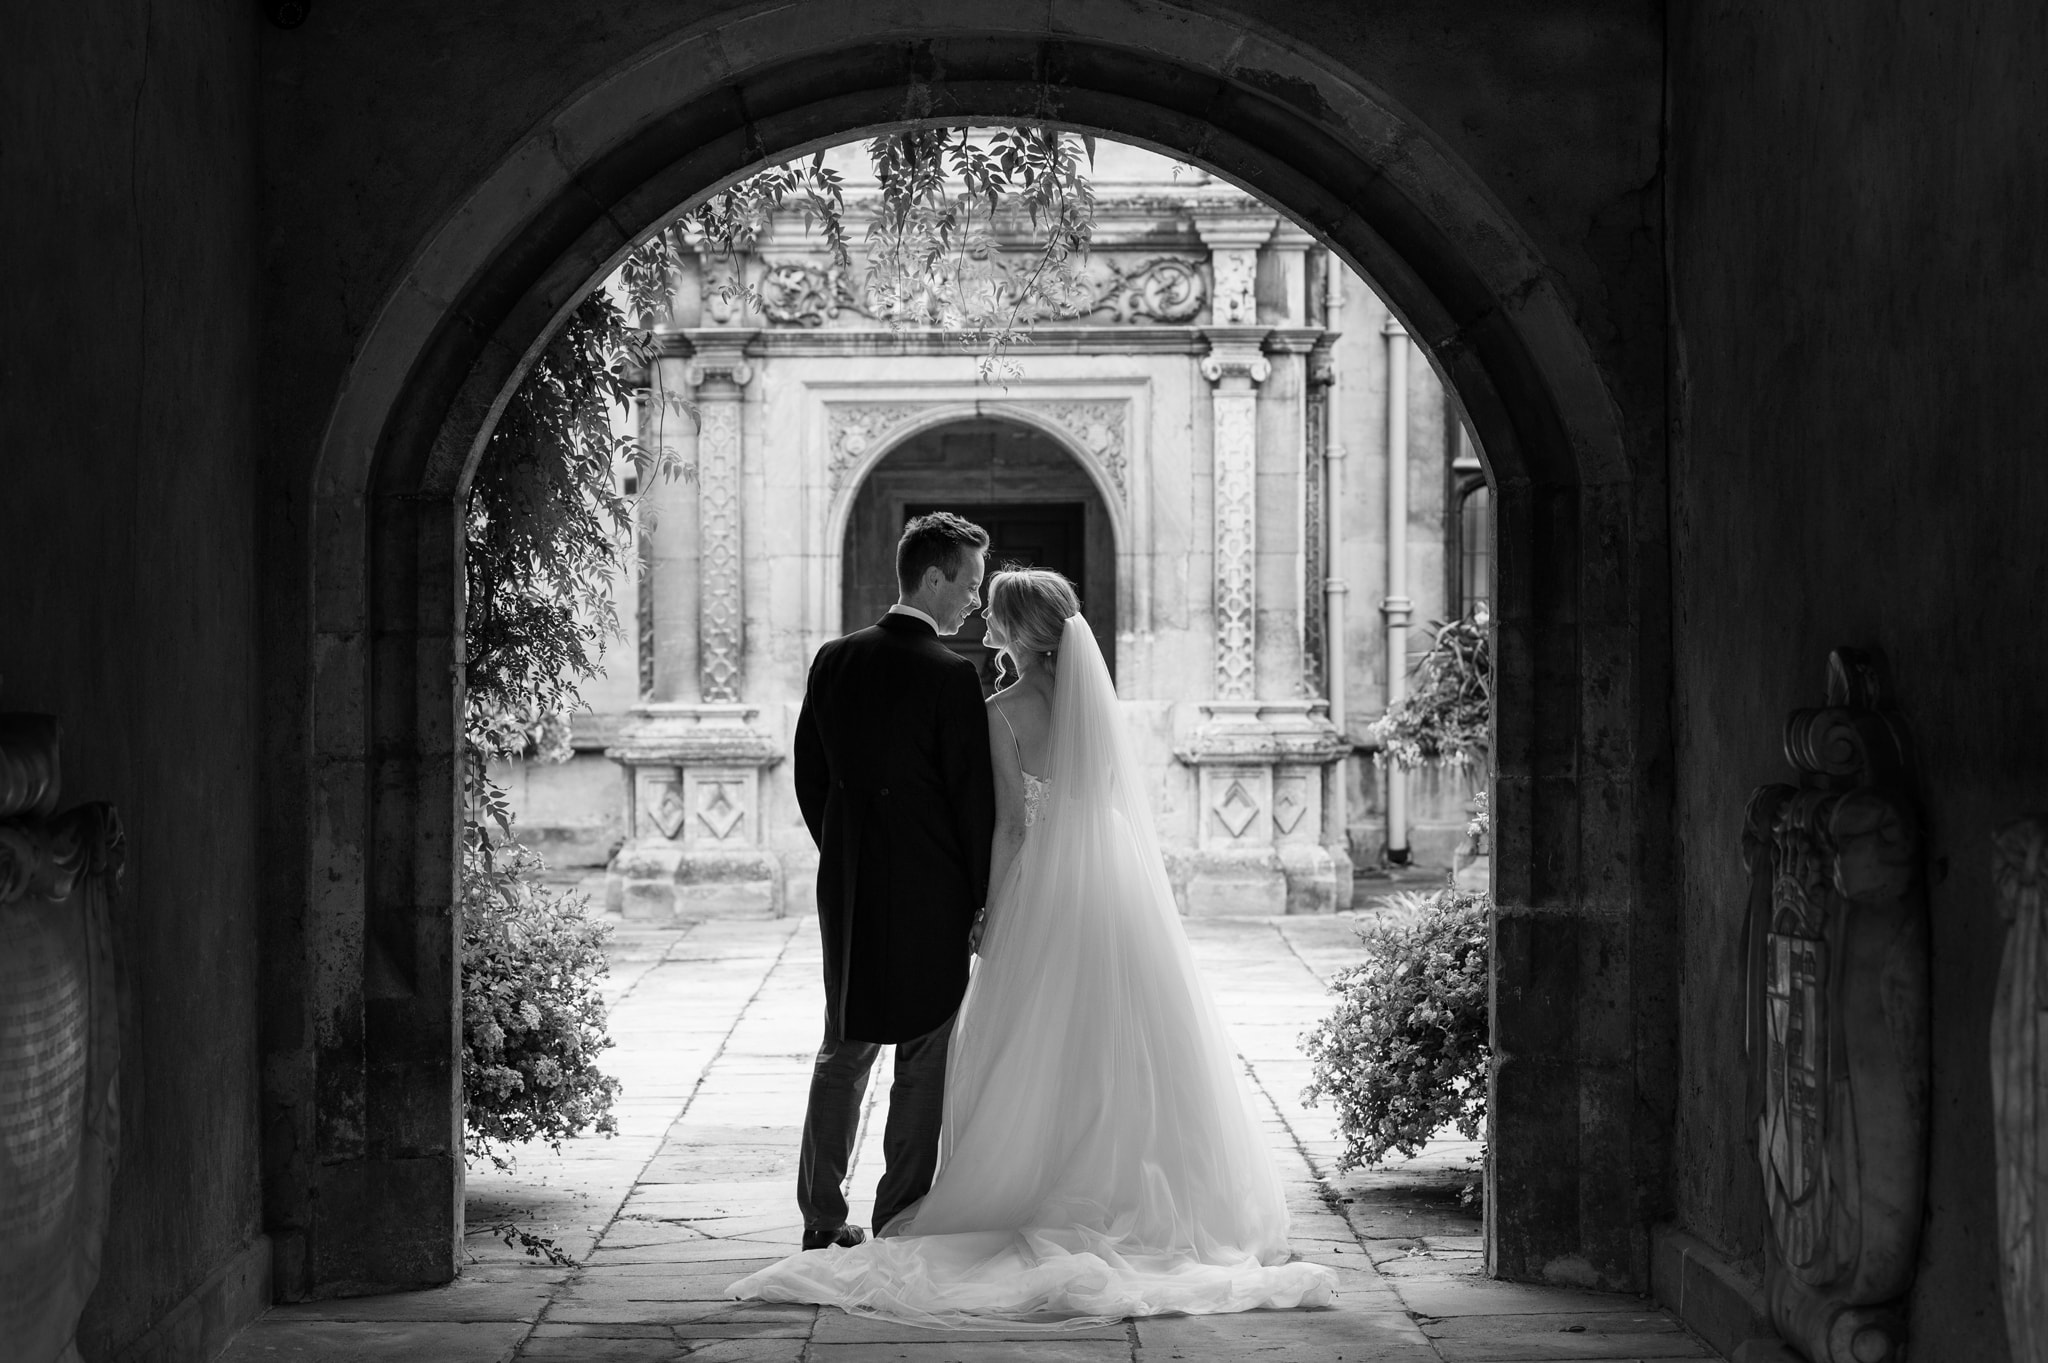 Bride and groom underneath an arch